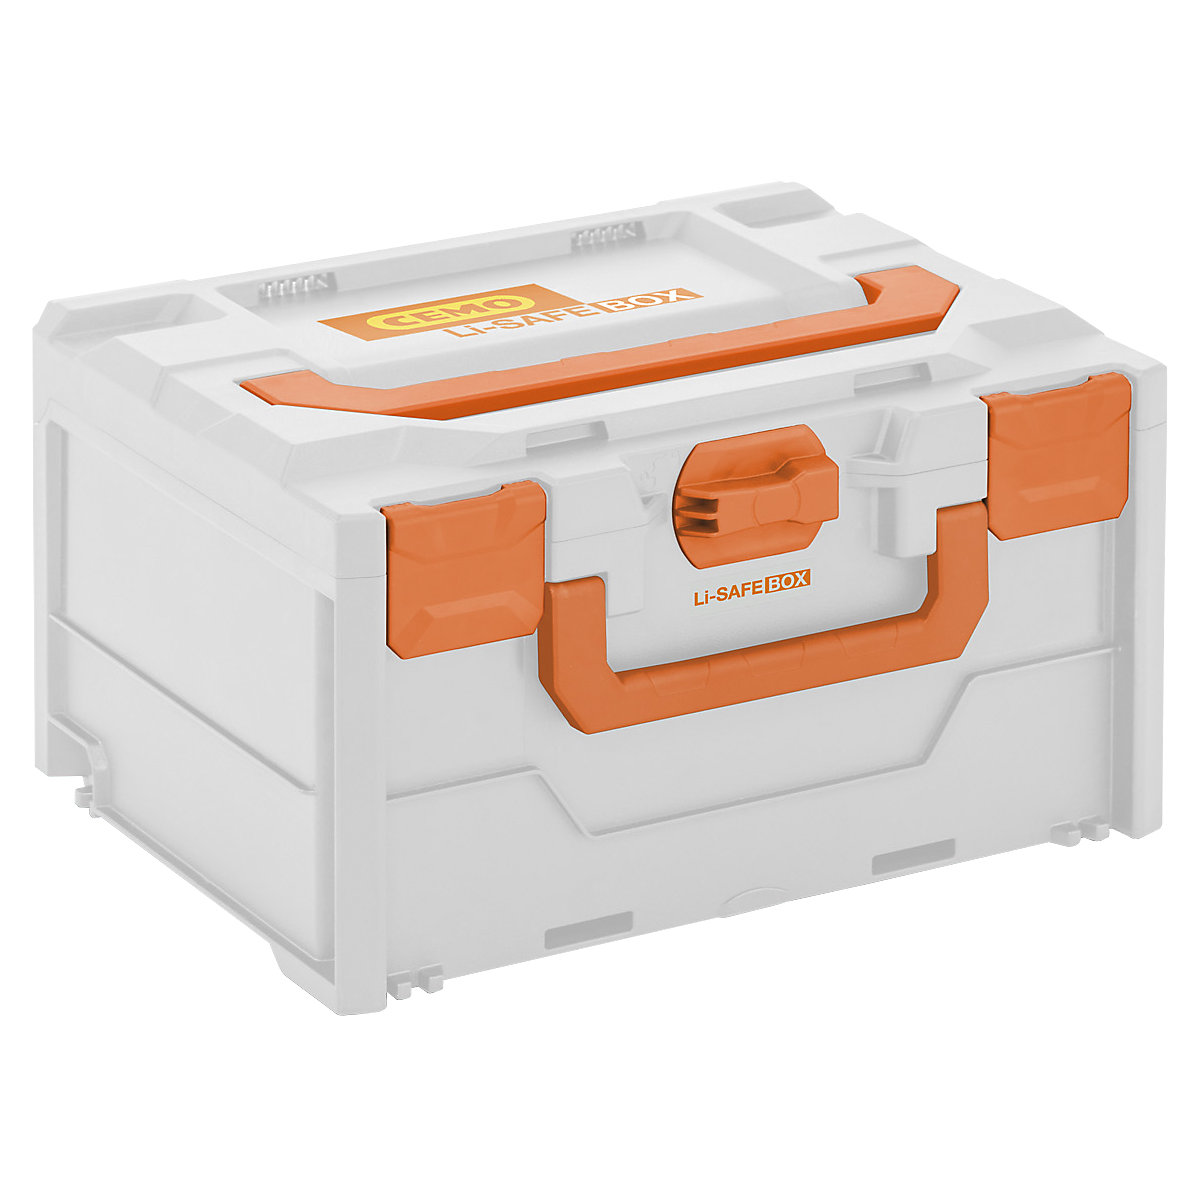 Systémový protipožární box na akumulátory Li-SAFE – CEMO